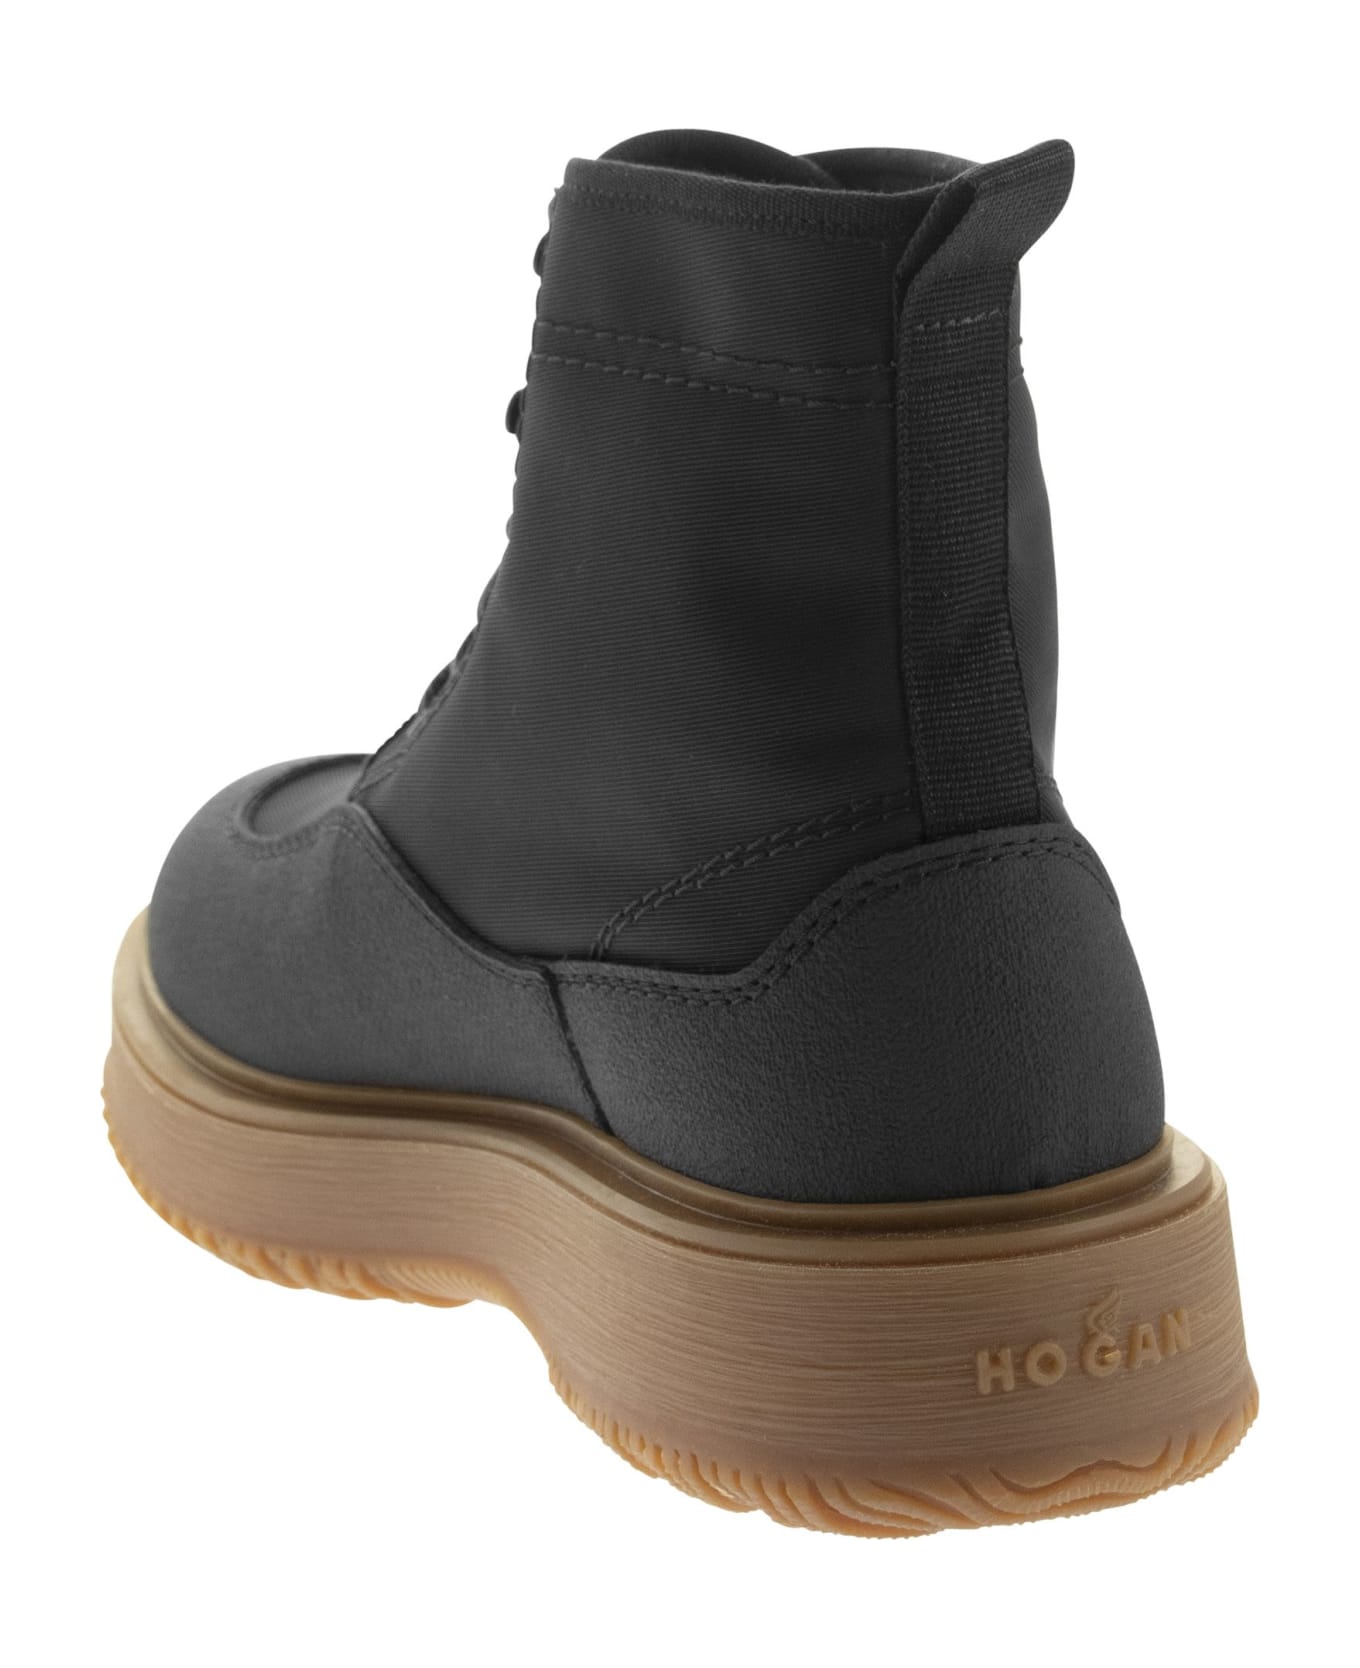 Hogan Untraditional - Boots Black - Black